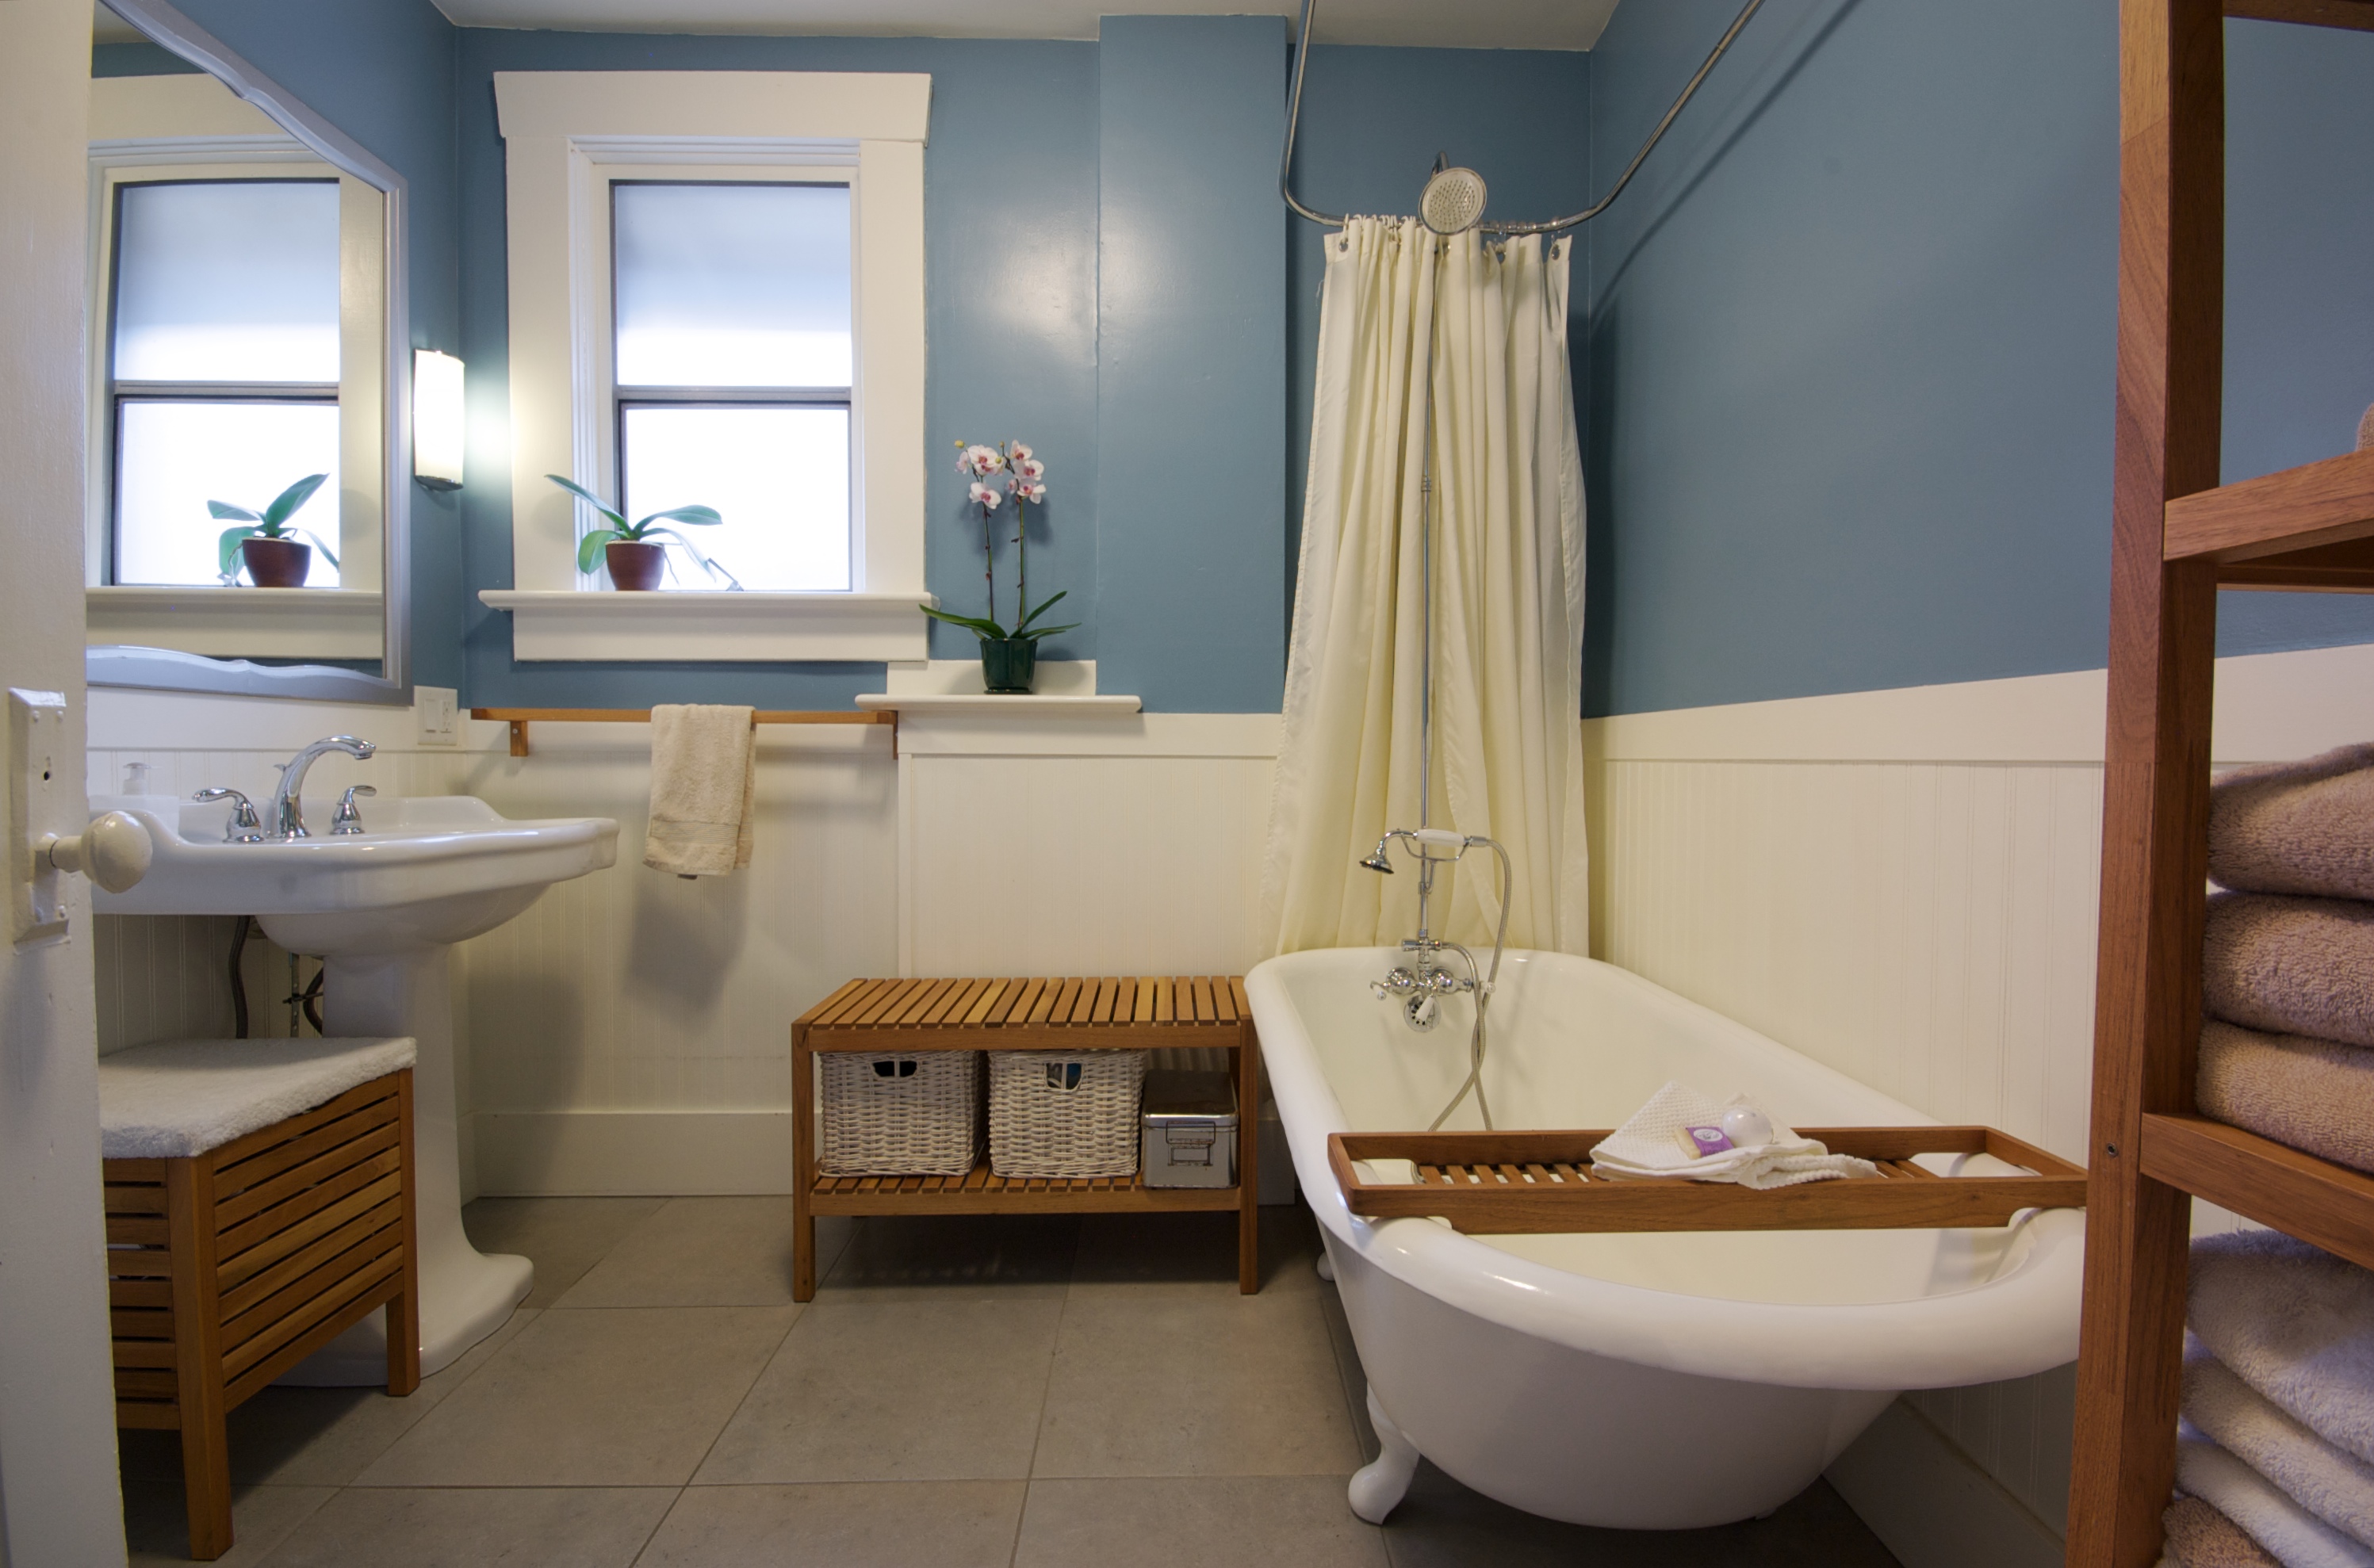 bathroom after home renovation drive - home renovations vancouver - flipside homes